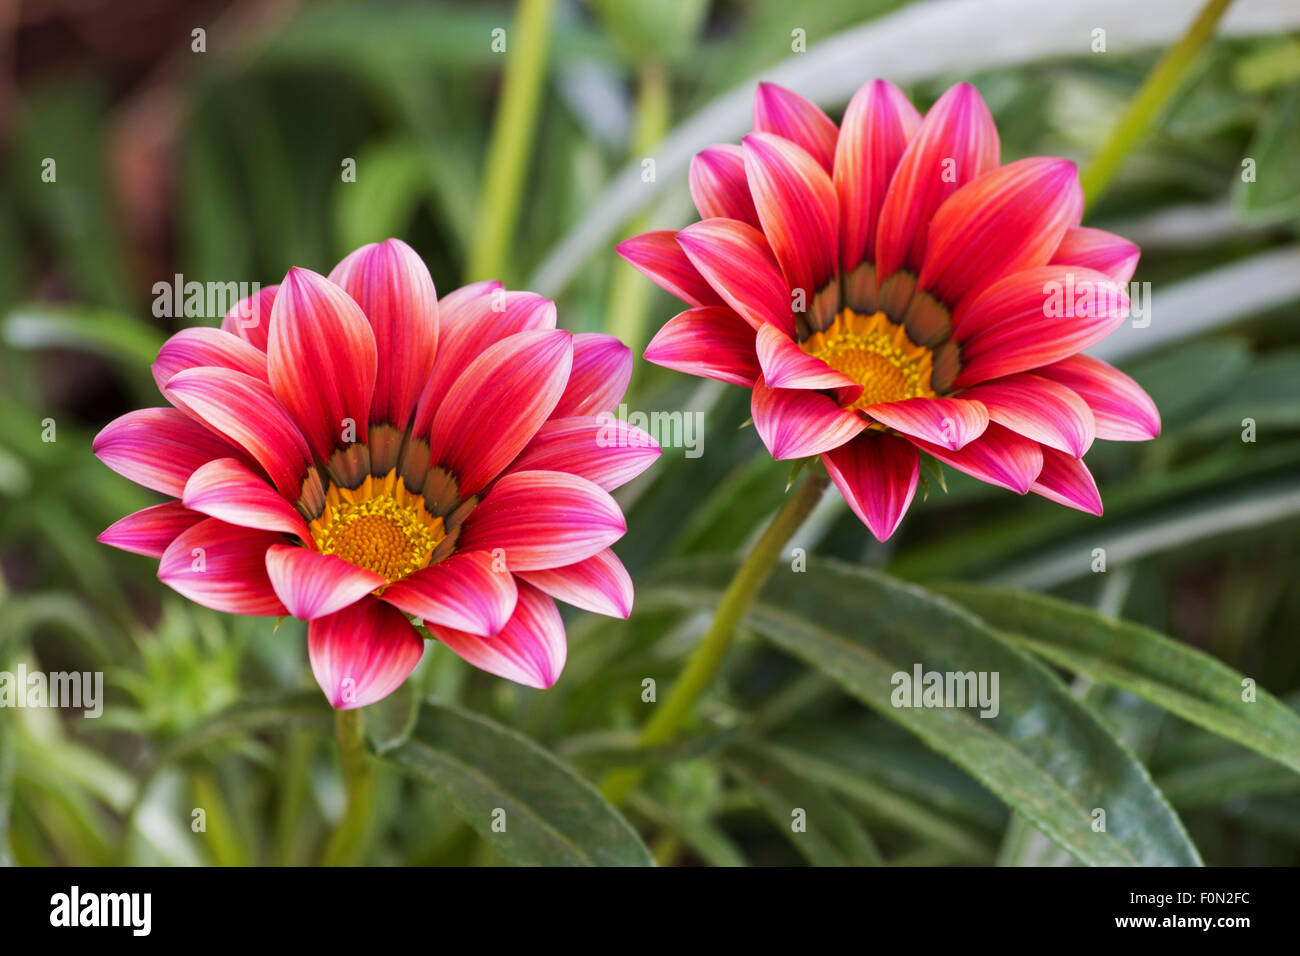 Gazania plant in flower Stock Photo